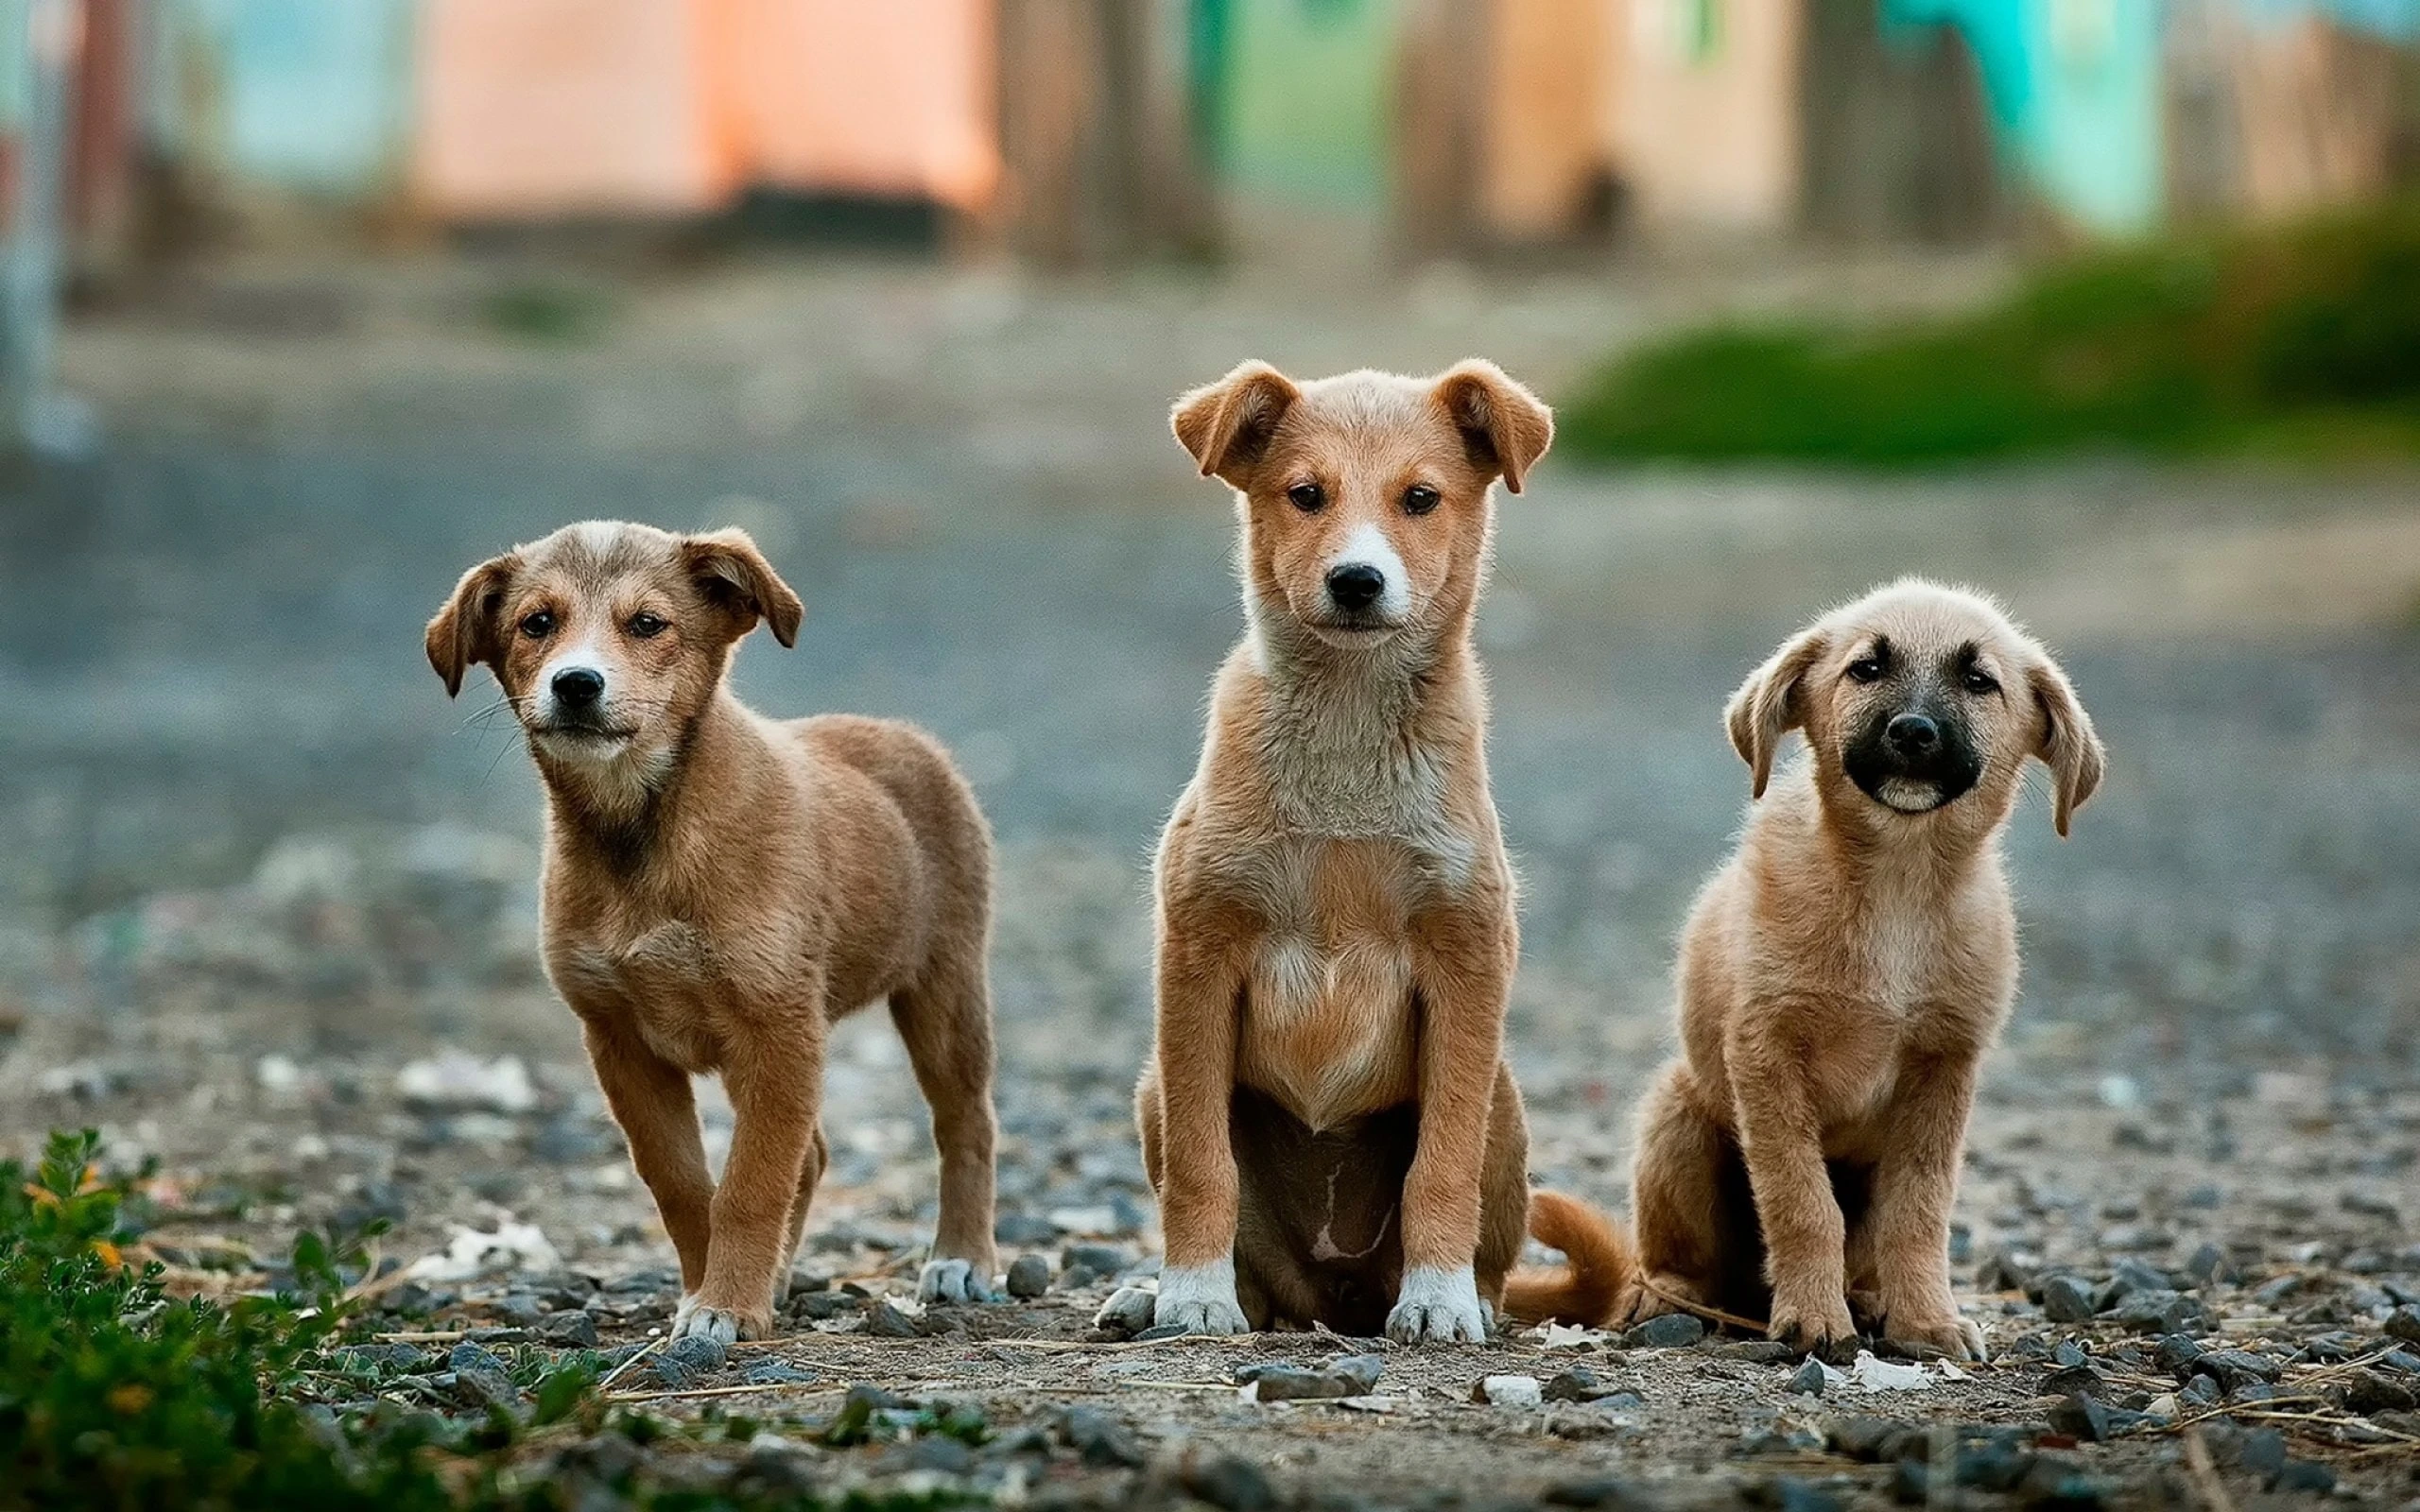 anoir-chafik-Three small dogs grouped together-unsplash